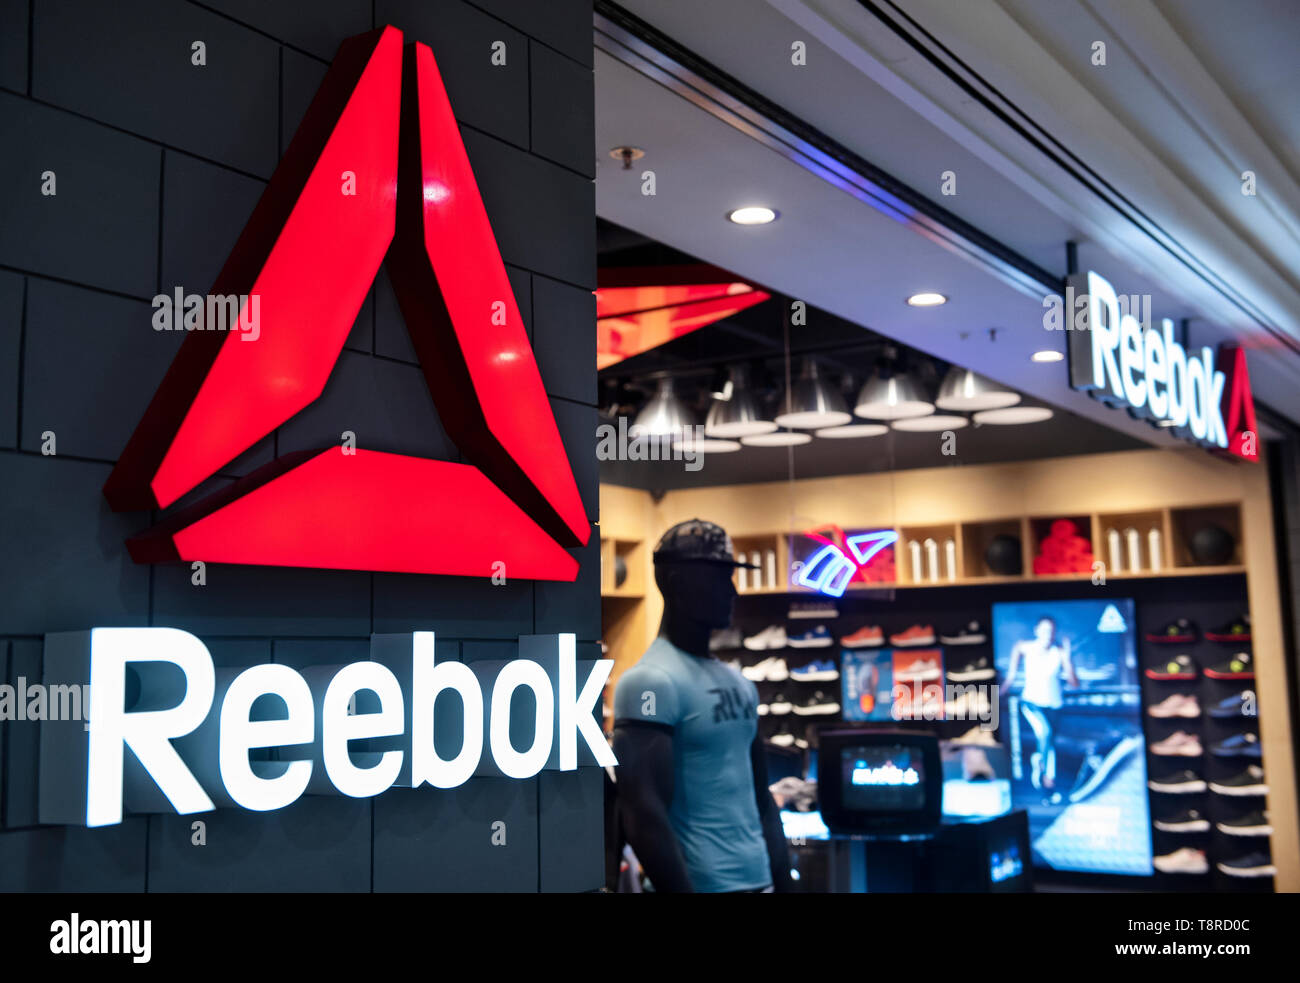 Calzado empresa multinacional alemana marca Reebok store es visto en Hong  Kong Fotografía de stock - Alamy